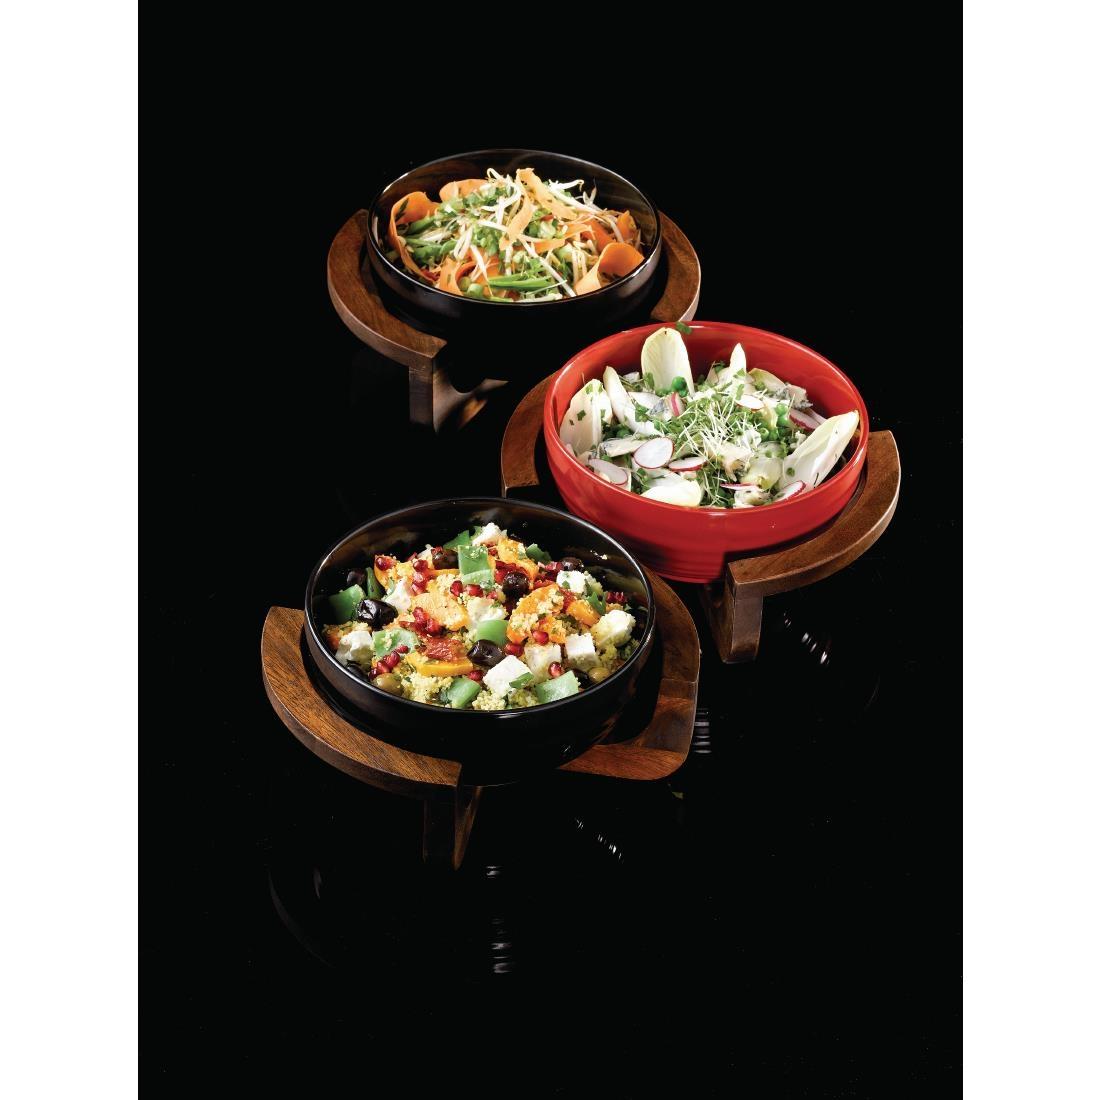 Art de Cuisine Red Glaze Ripple Bowls Large (Pack of 4) - GF706  - 2